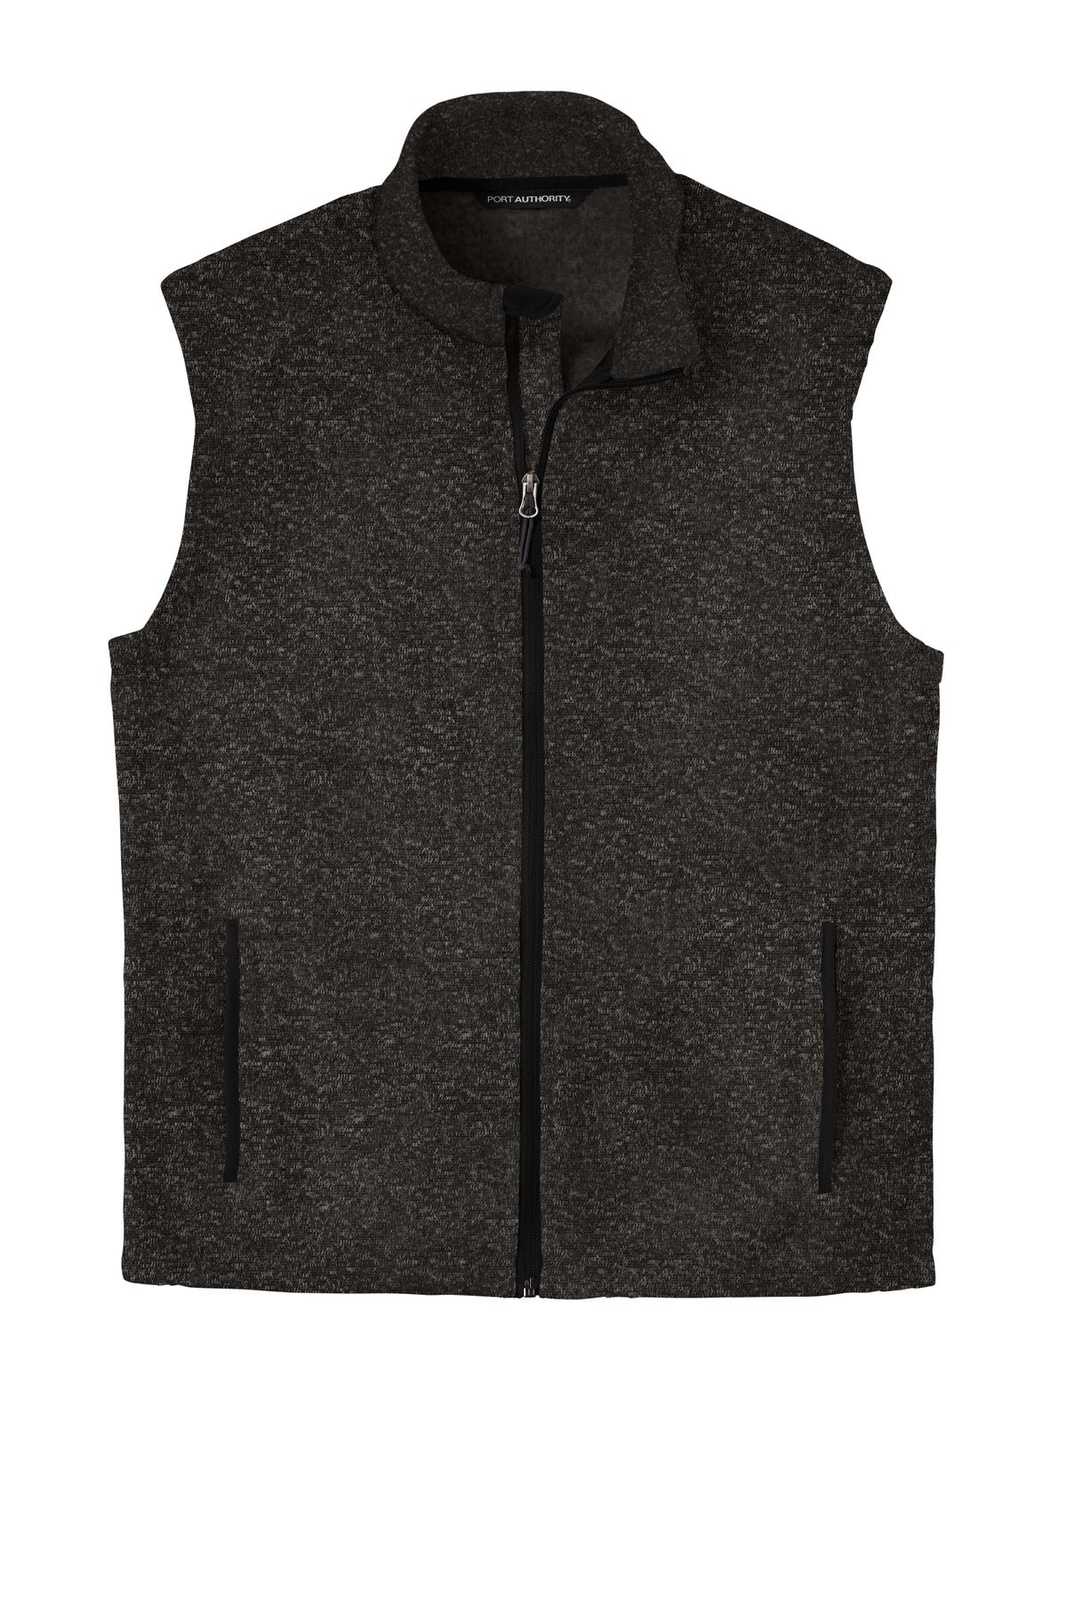 Port Authority F236 Sweater Fleece Vest - Black Heather - HIT a Double - 5